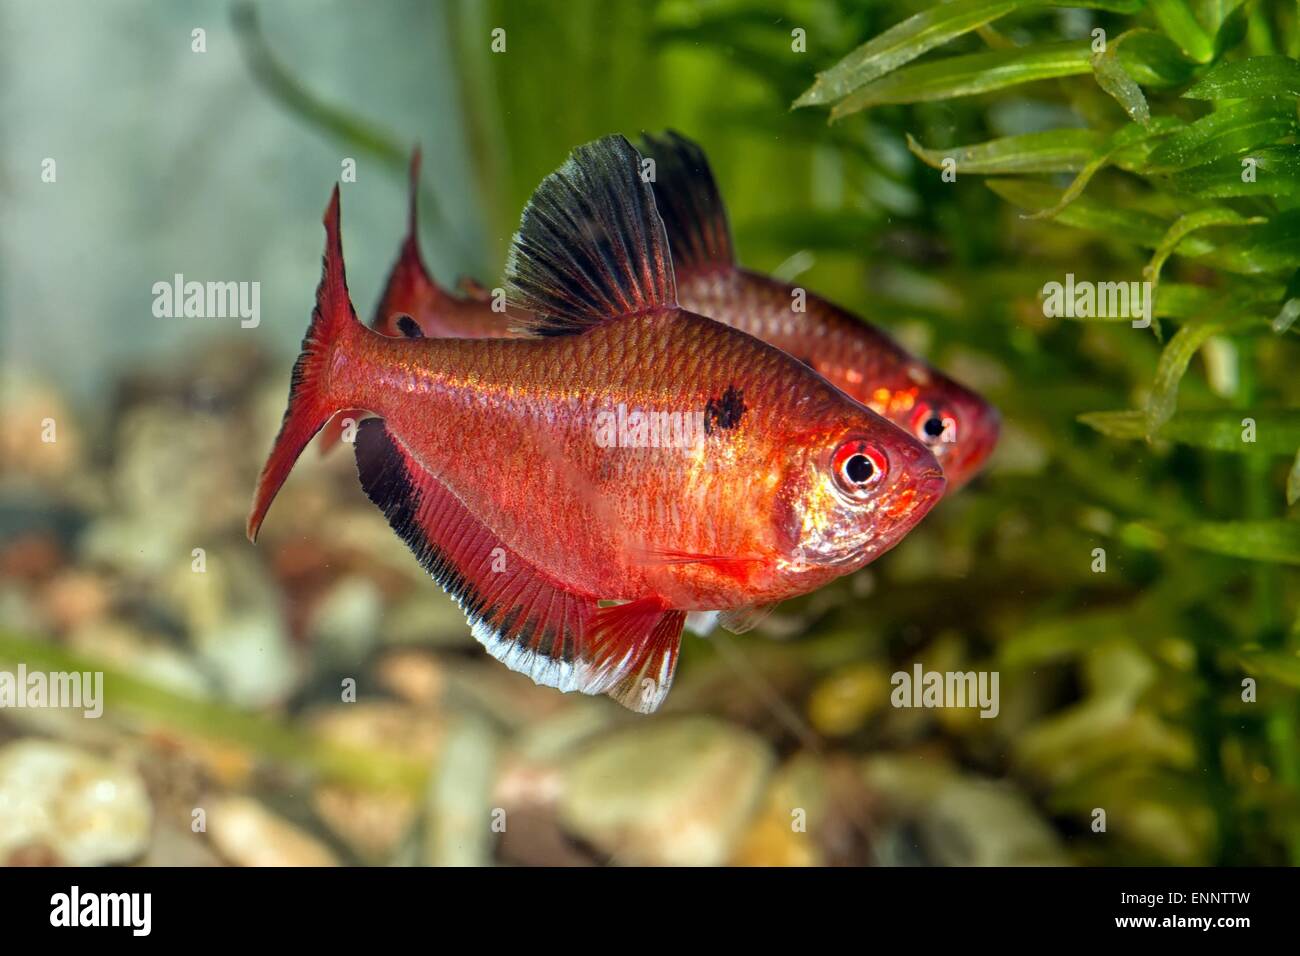 Tropical freshwater aquarium fish from genus Hyphessobrycon. Stock Photo